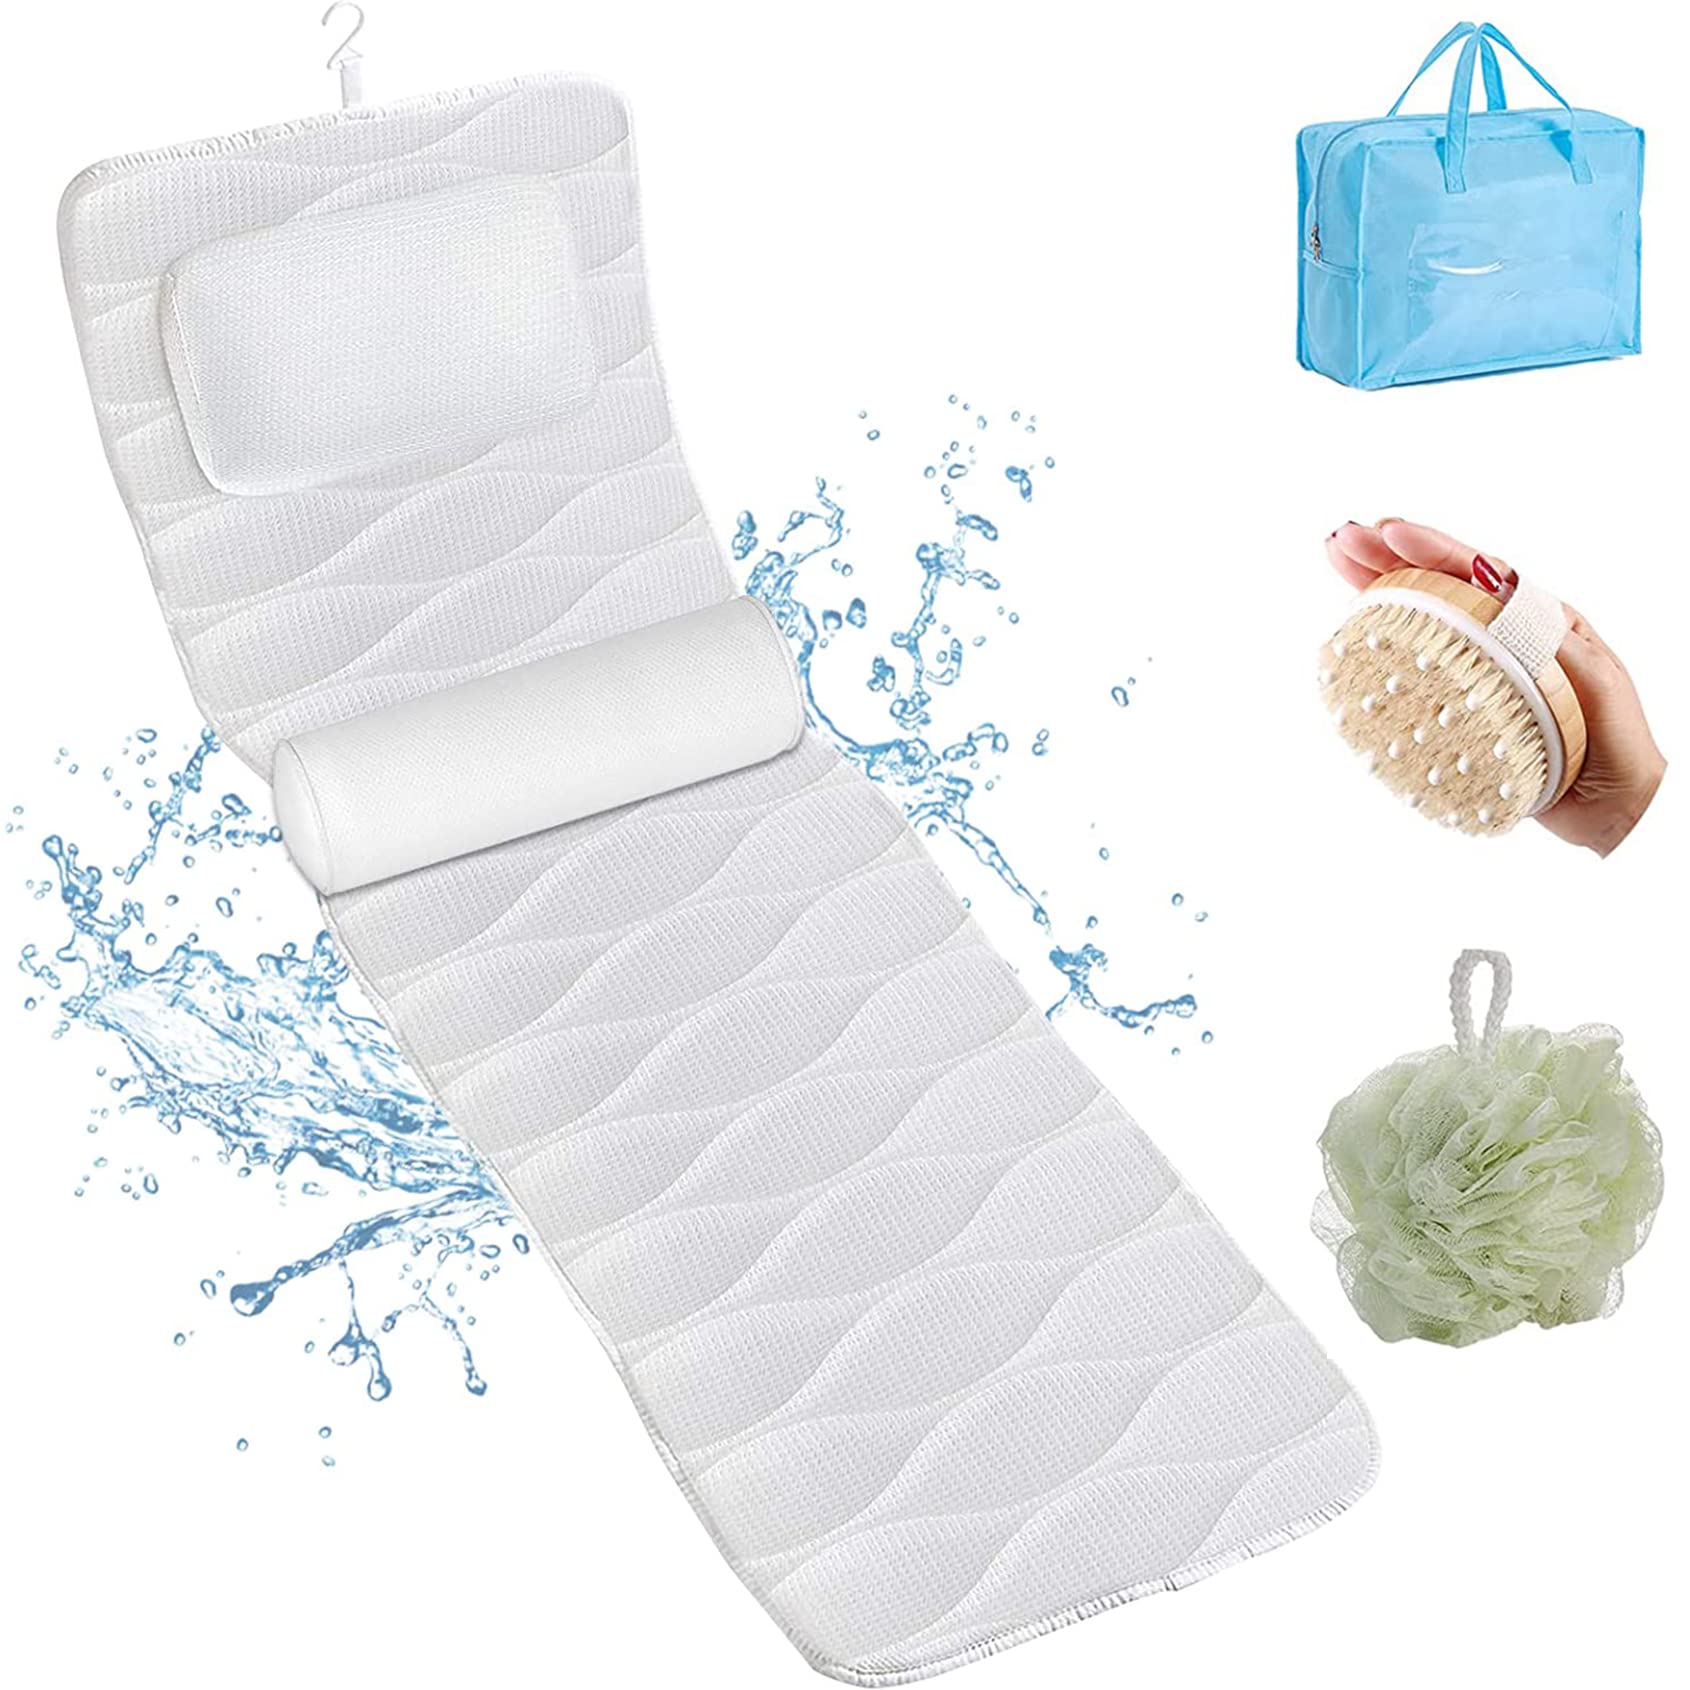 Full Body Bath Pillow, Bath Pillows for tub with Mesh Washing Bag